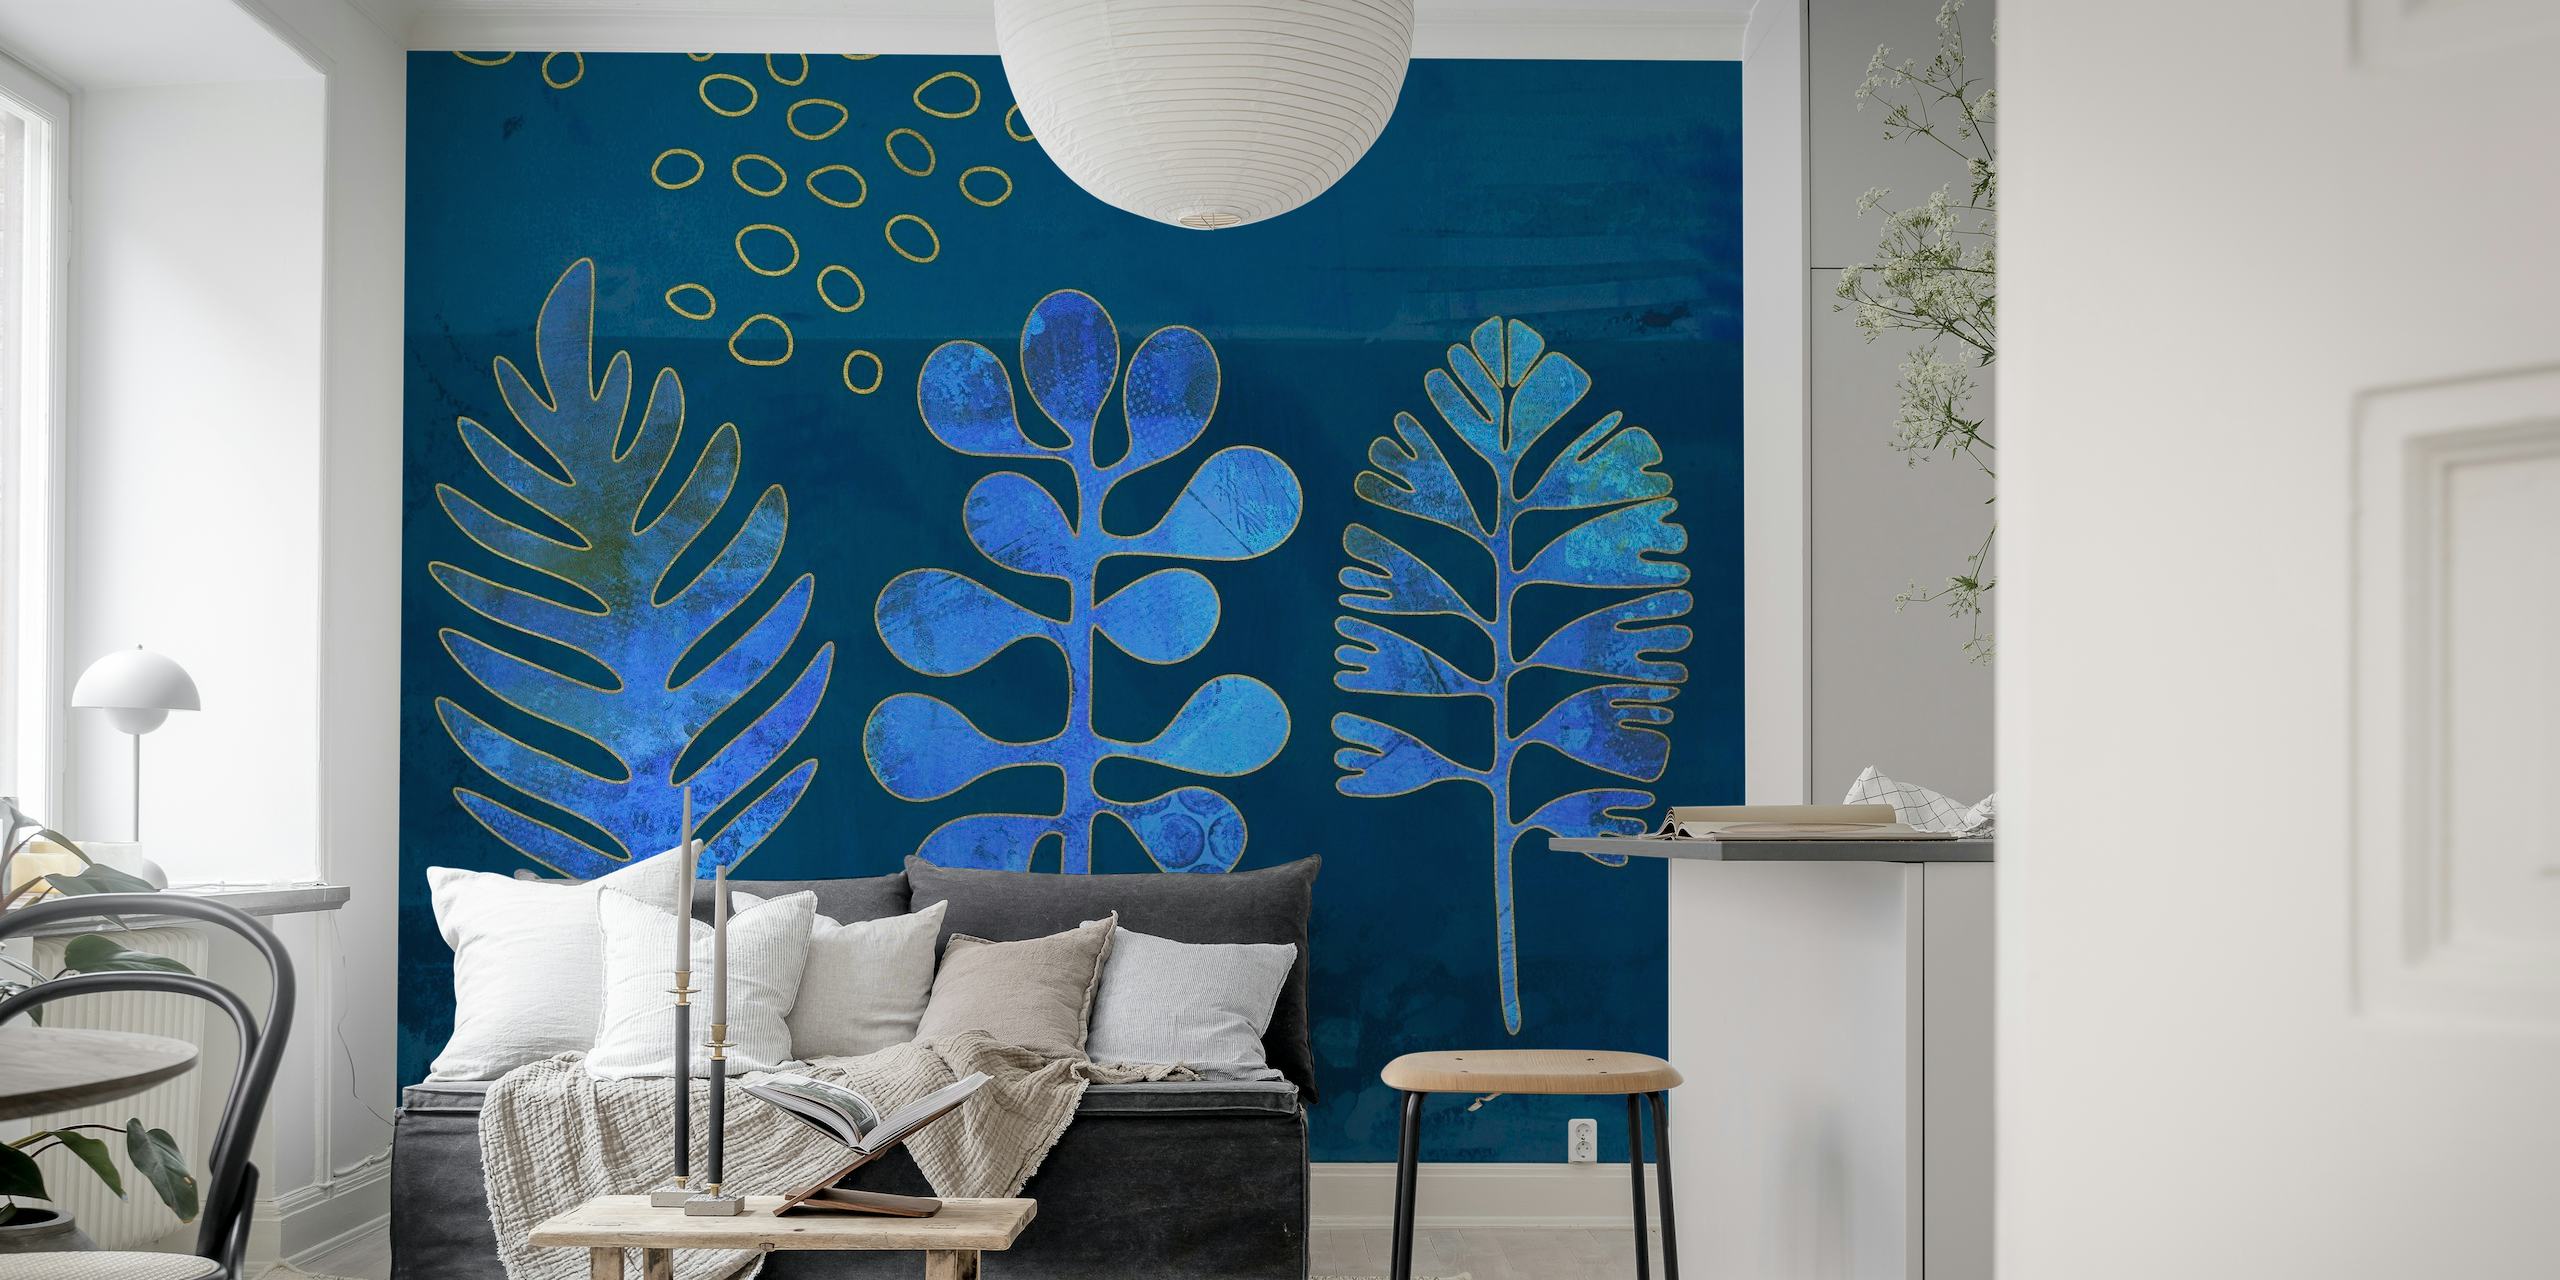 Whimsical Plant Shapes Mixed Media Art Blue behang